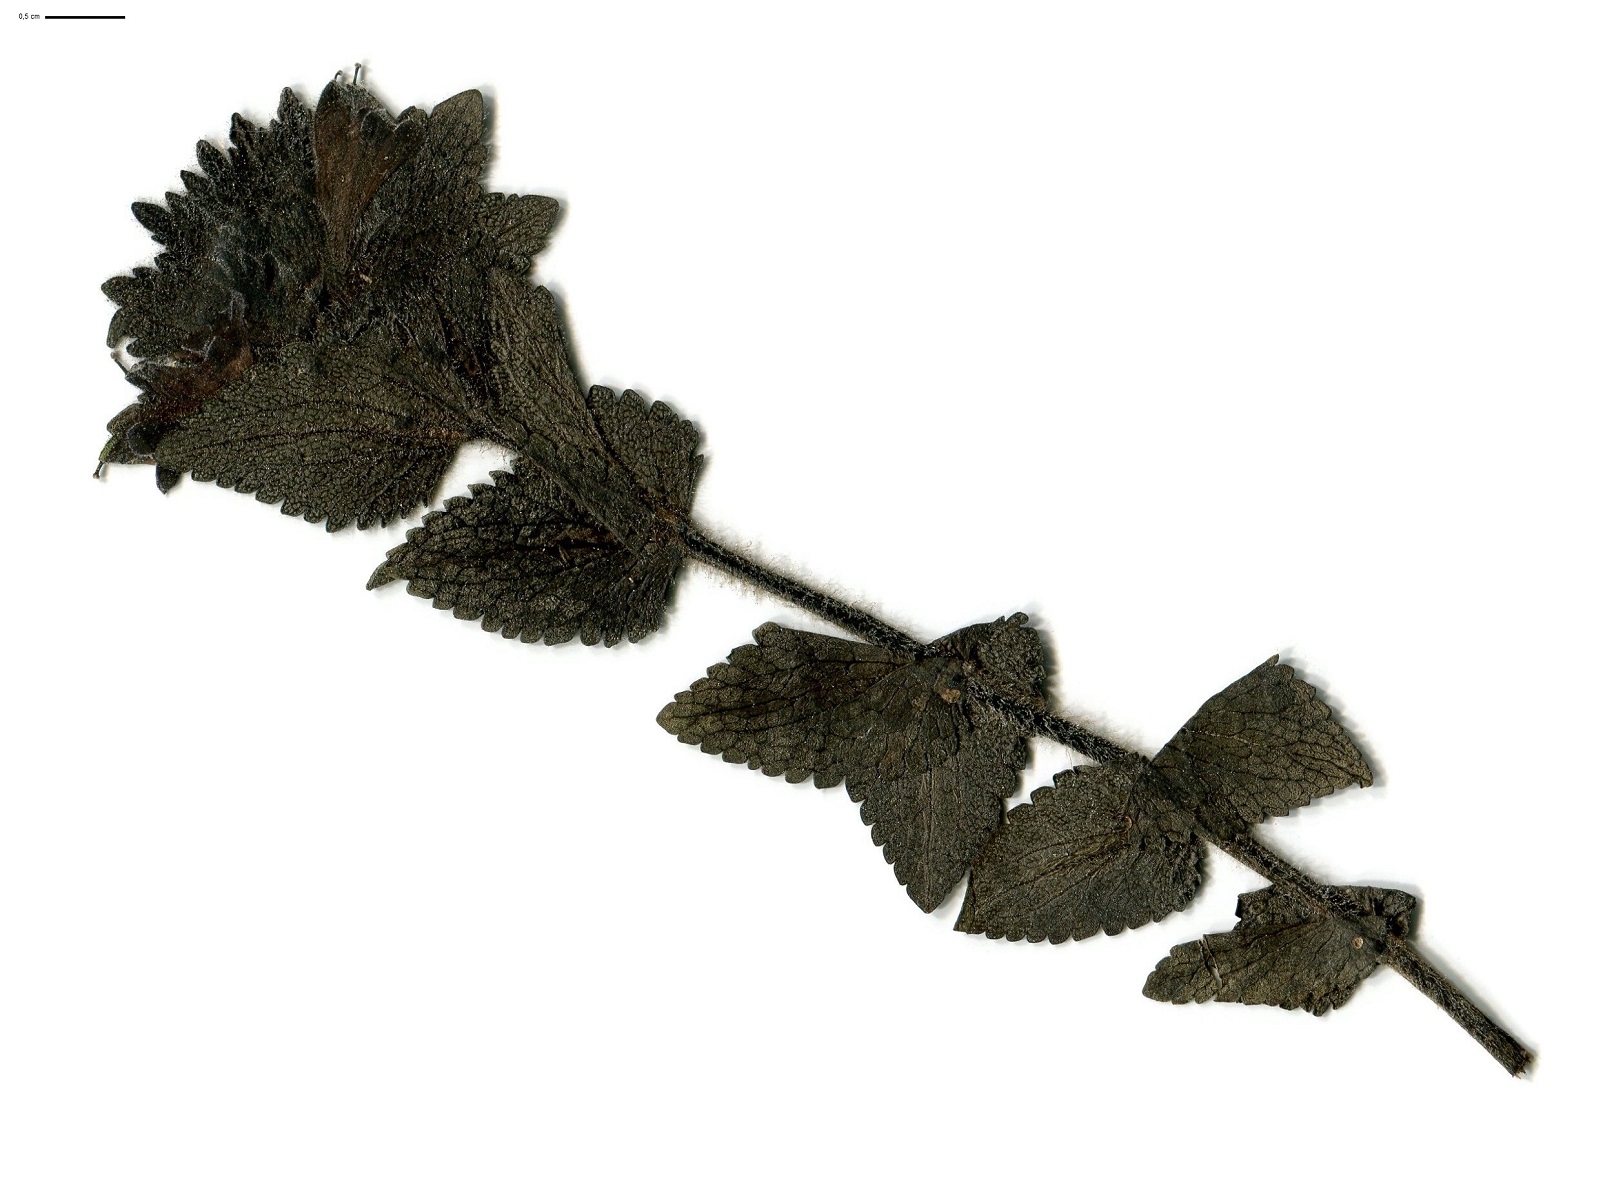 Bartsia alpina (Orobanchaceae)